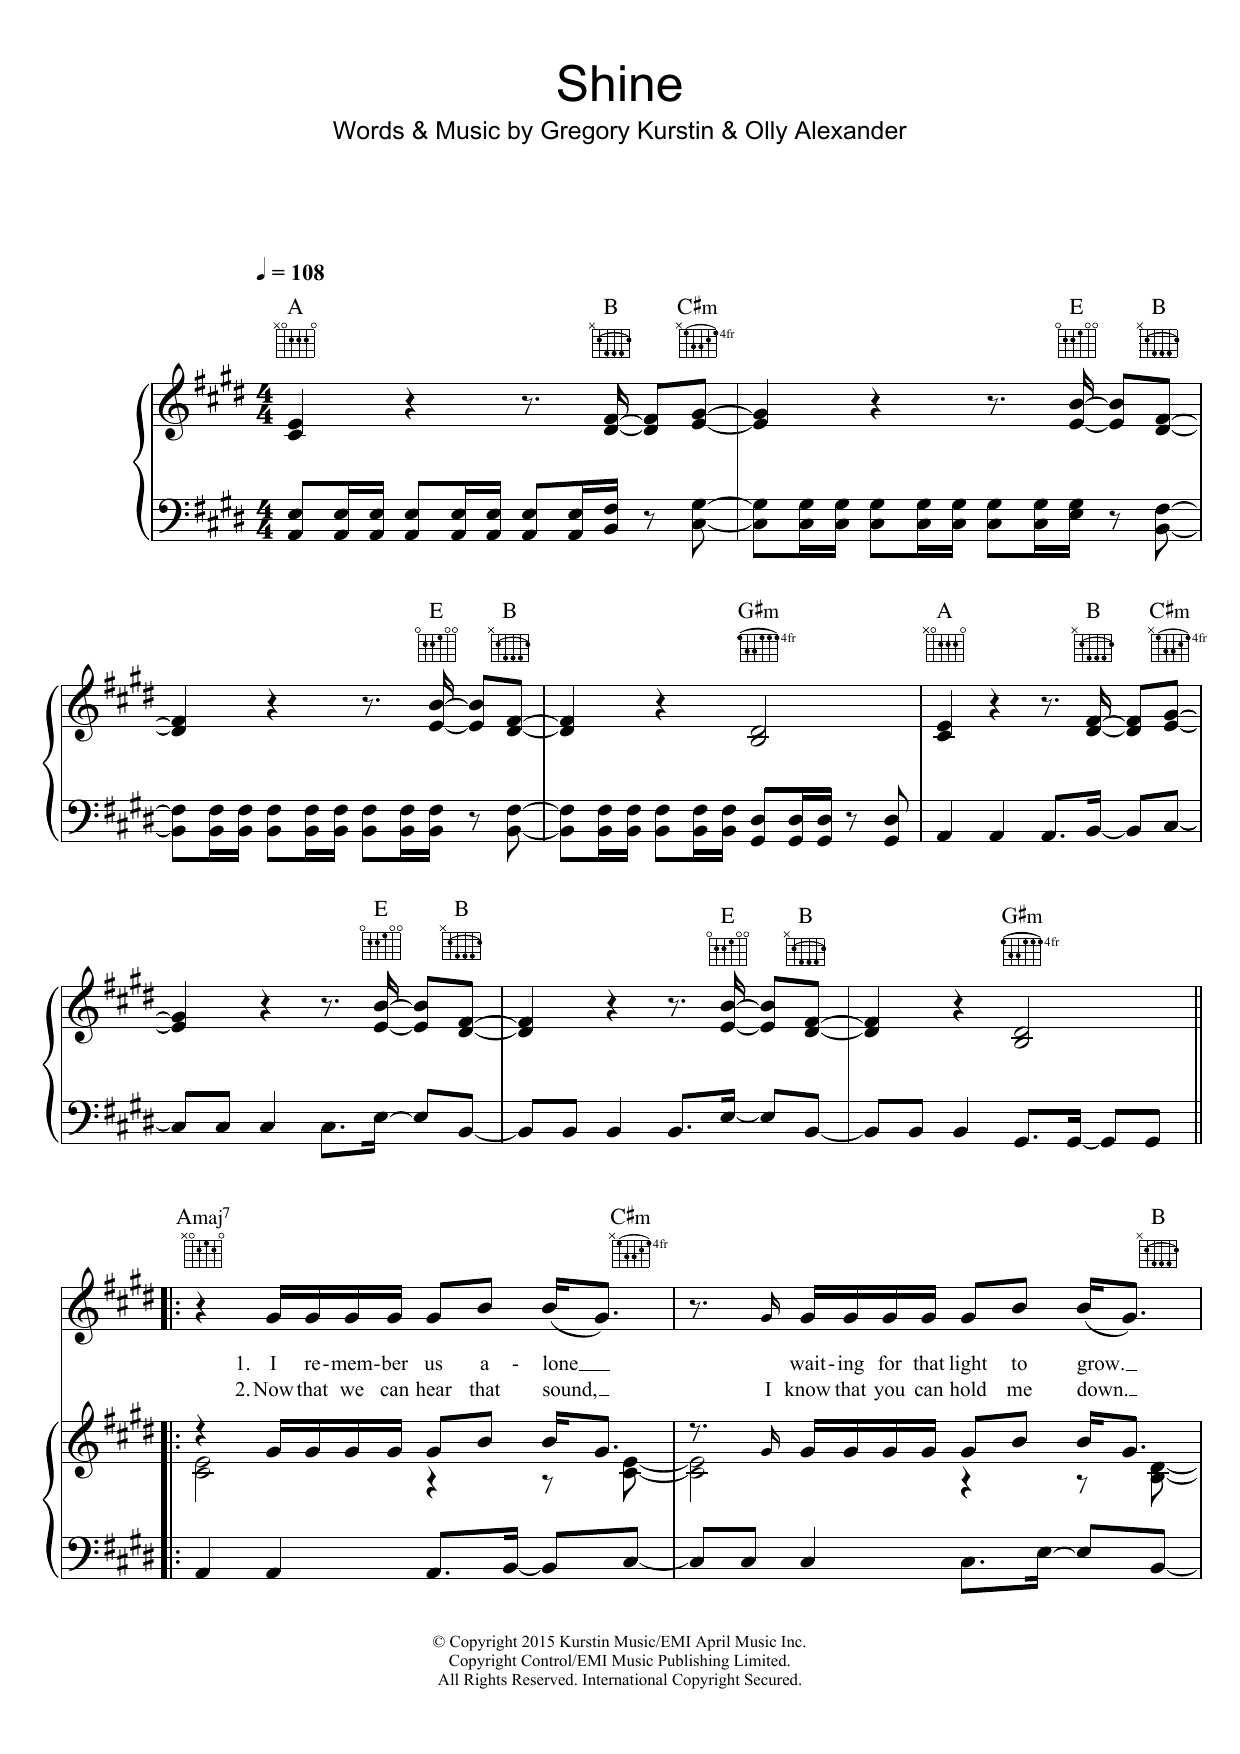 Years & Years Shine Sheet Music Notes & Chords for Ukulele Lyrics & Chords - Download or Print PDF